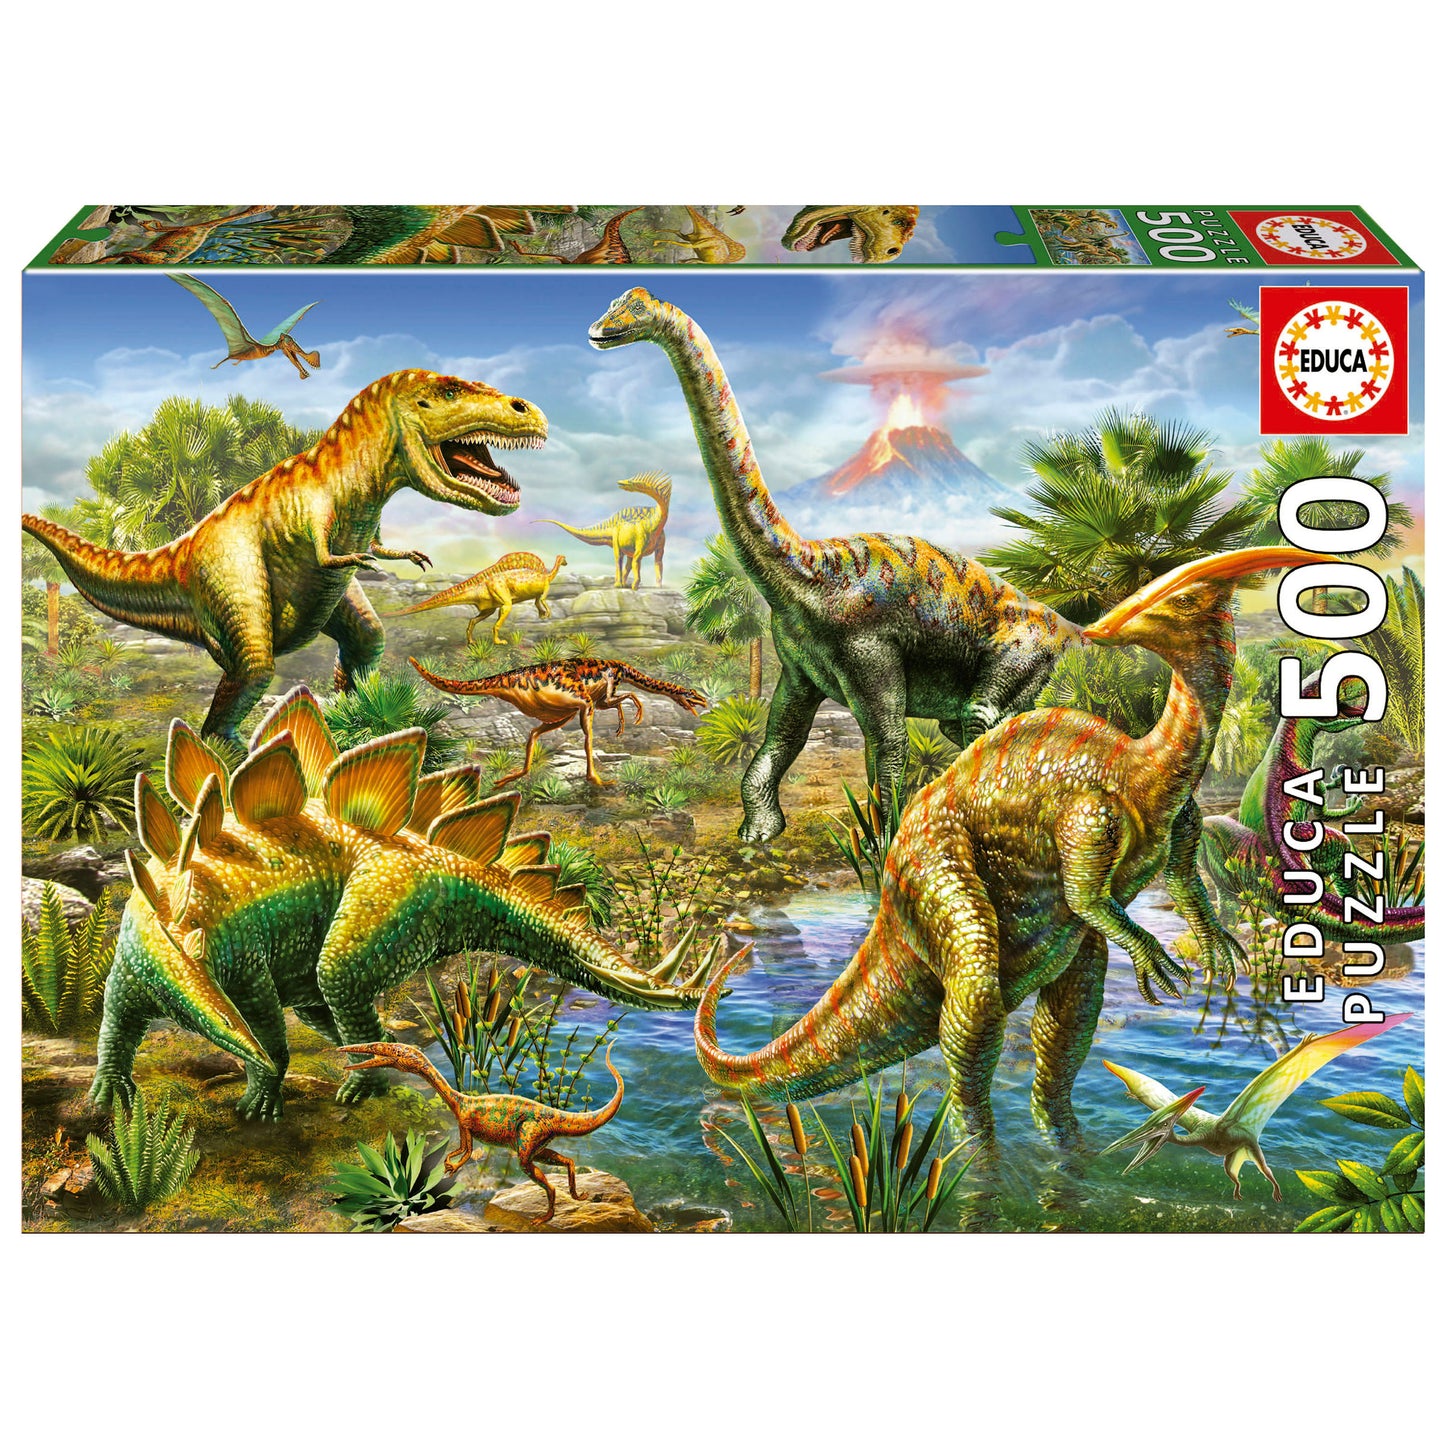 Jurassic Playground by Adrian Chesterman, 500 Piece Puzzle